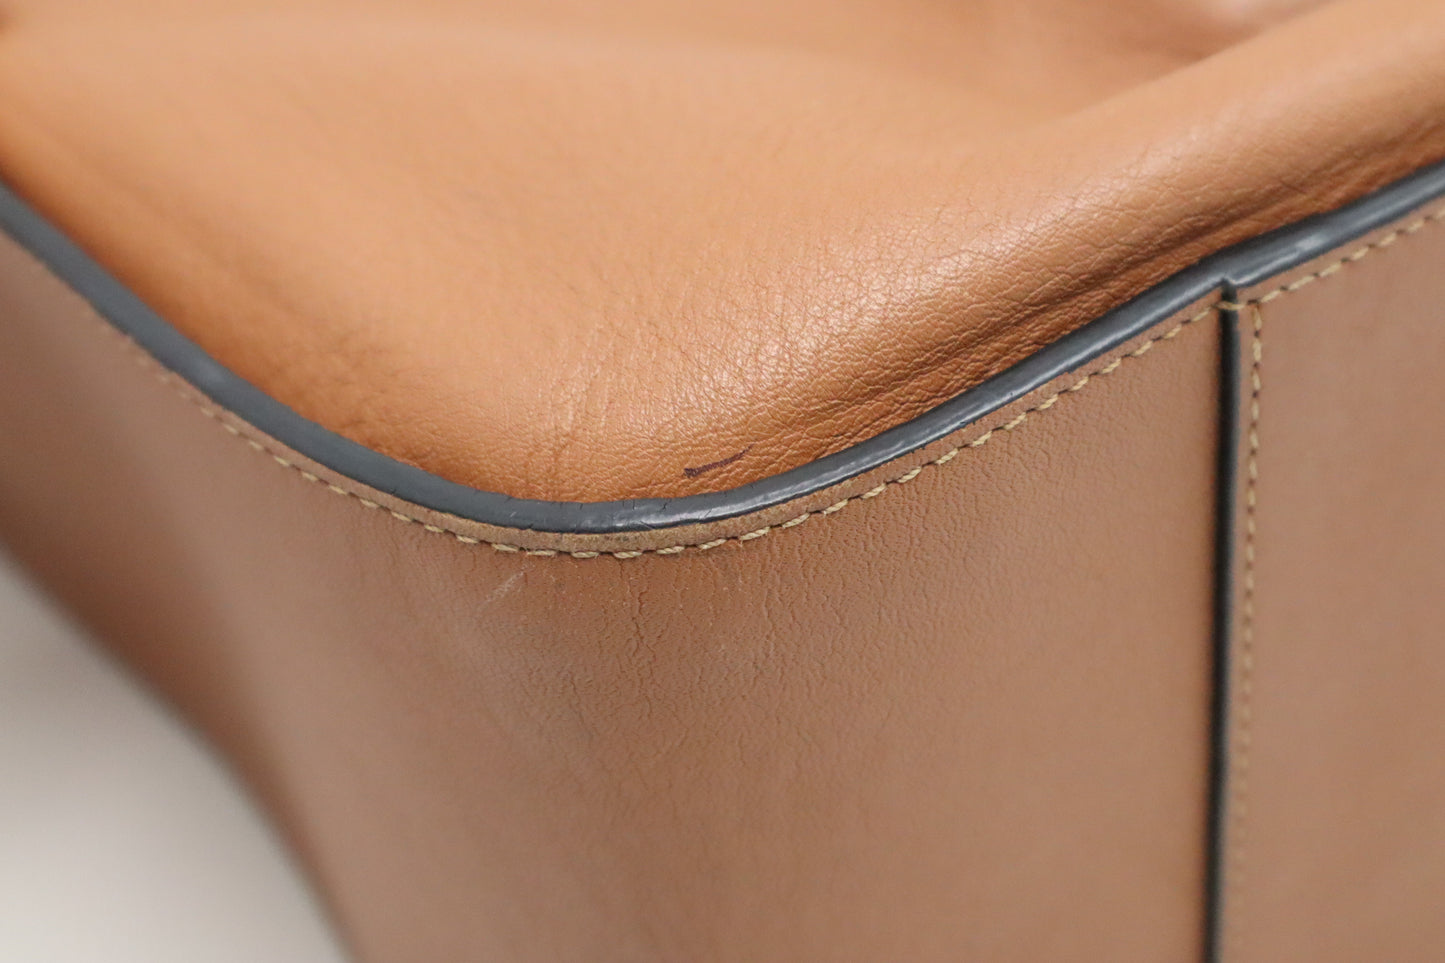 LOEWE Small Hammock Bag in Brown Leather